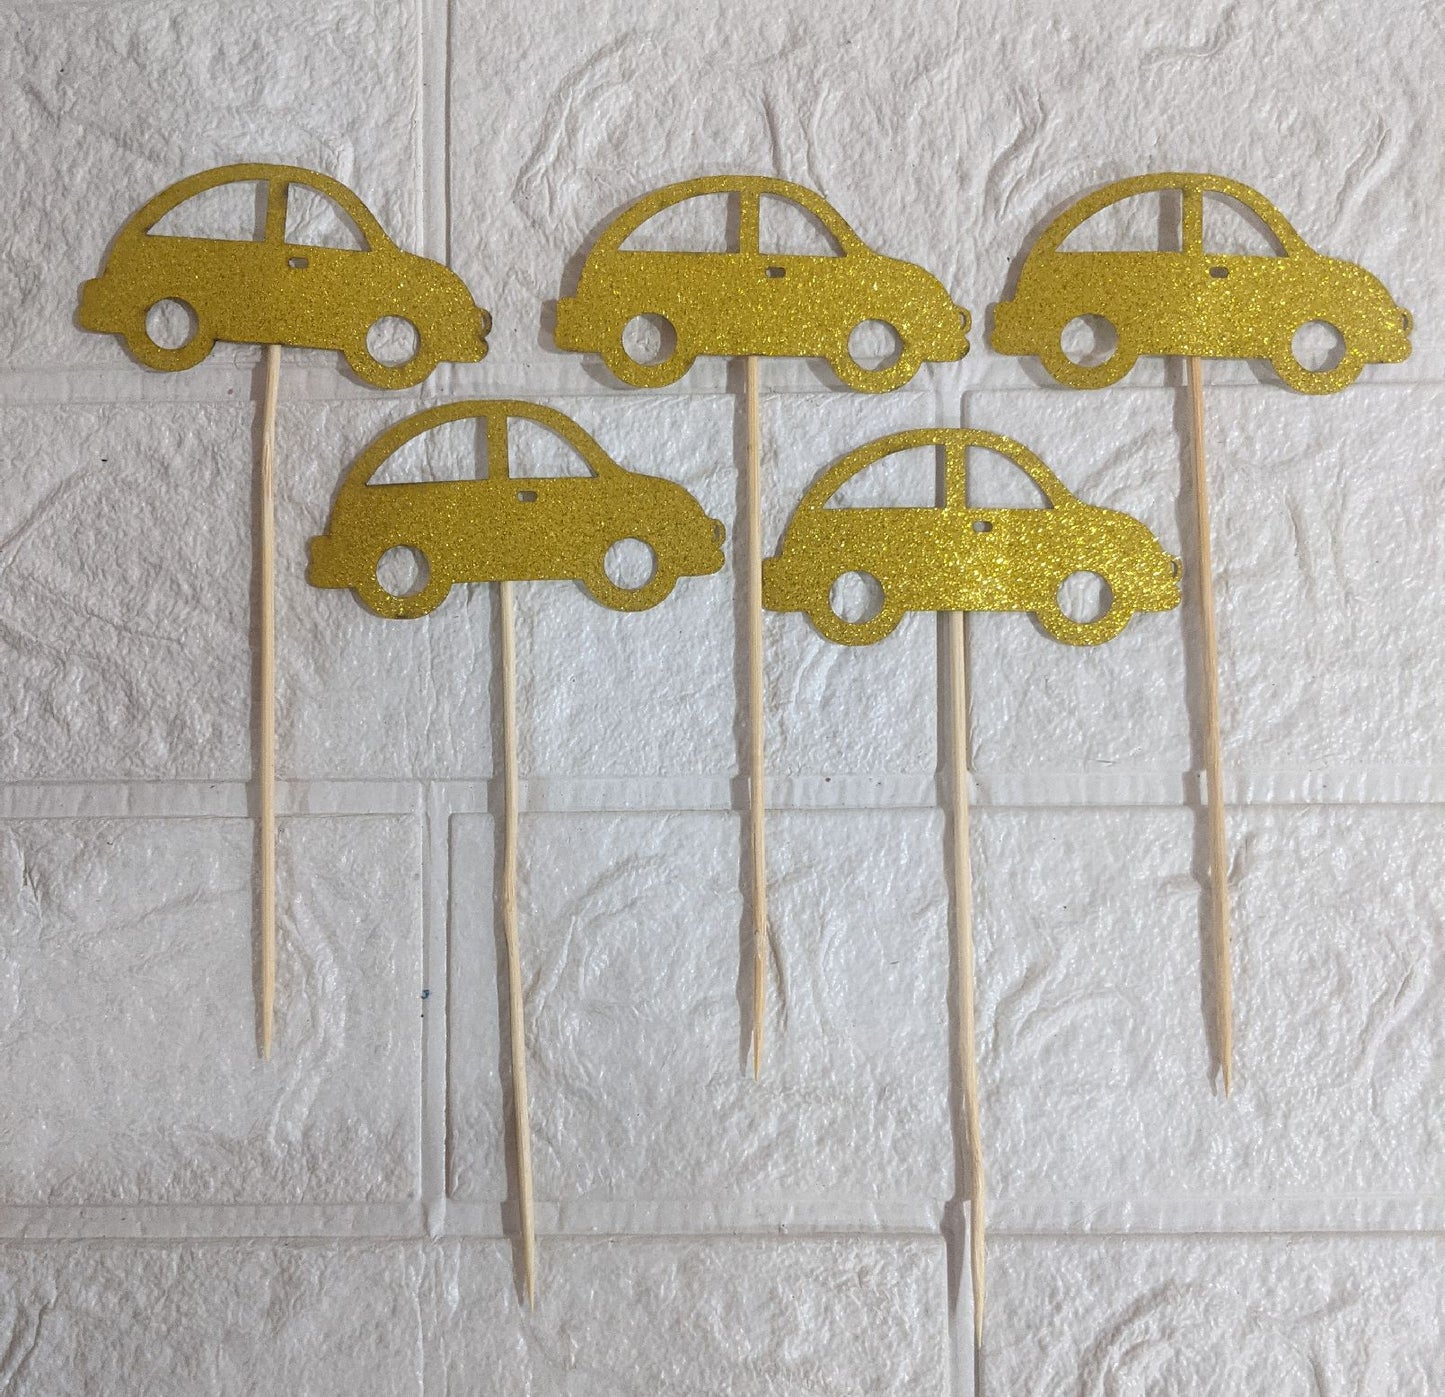 Golden Car Topper
Pack of - 5